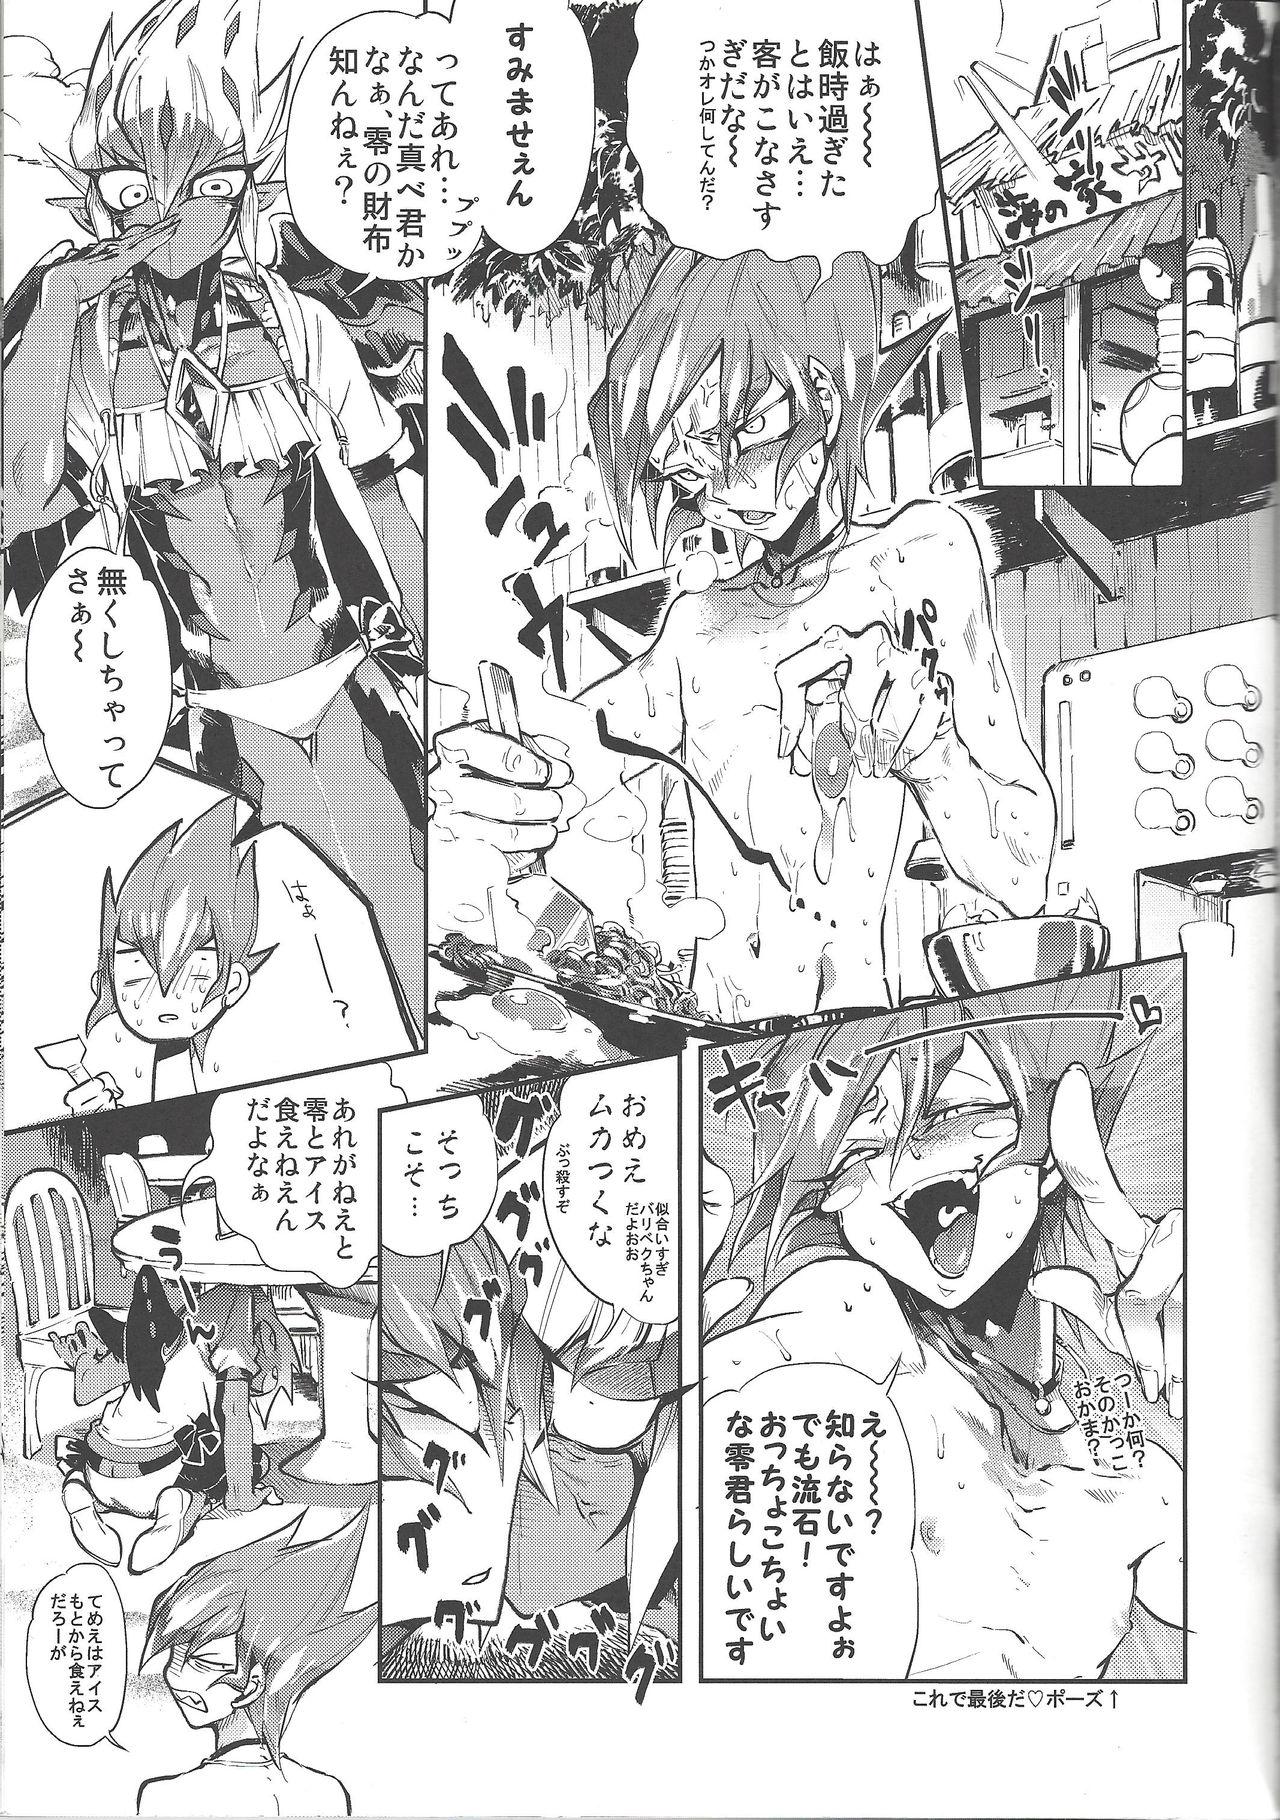 Milfporn XXXX no Vec-chan 3 - Yu-gi-oh zexal For - Page 4